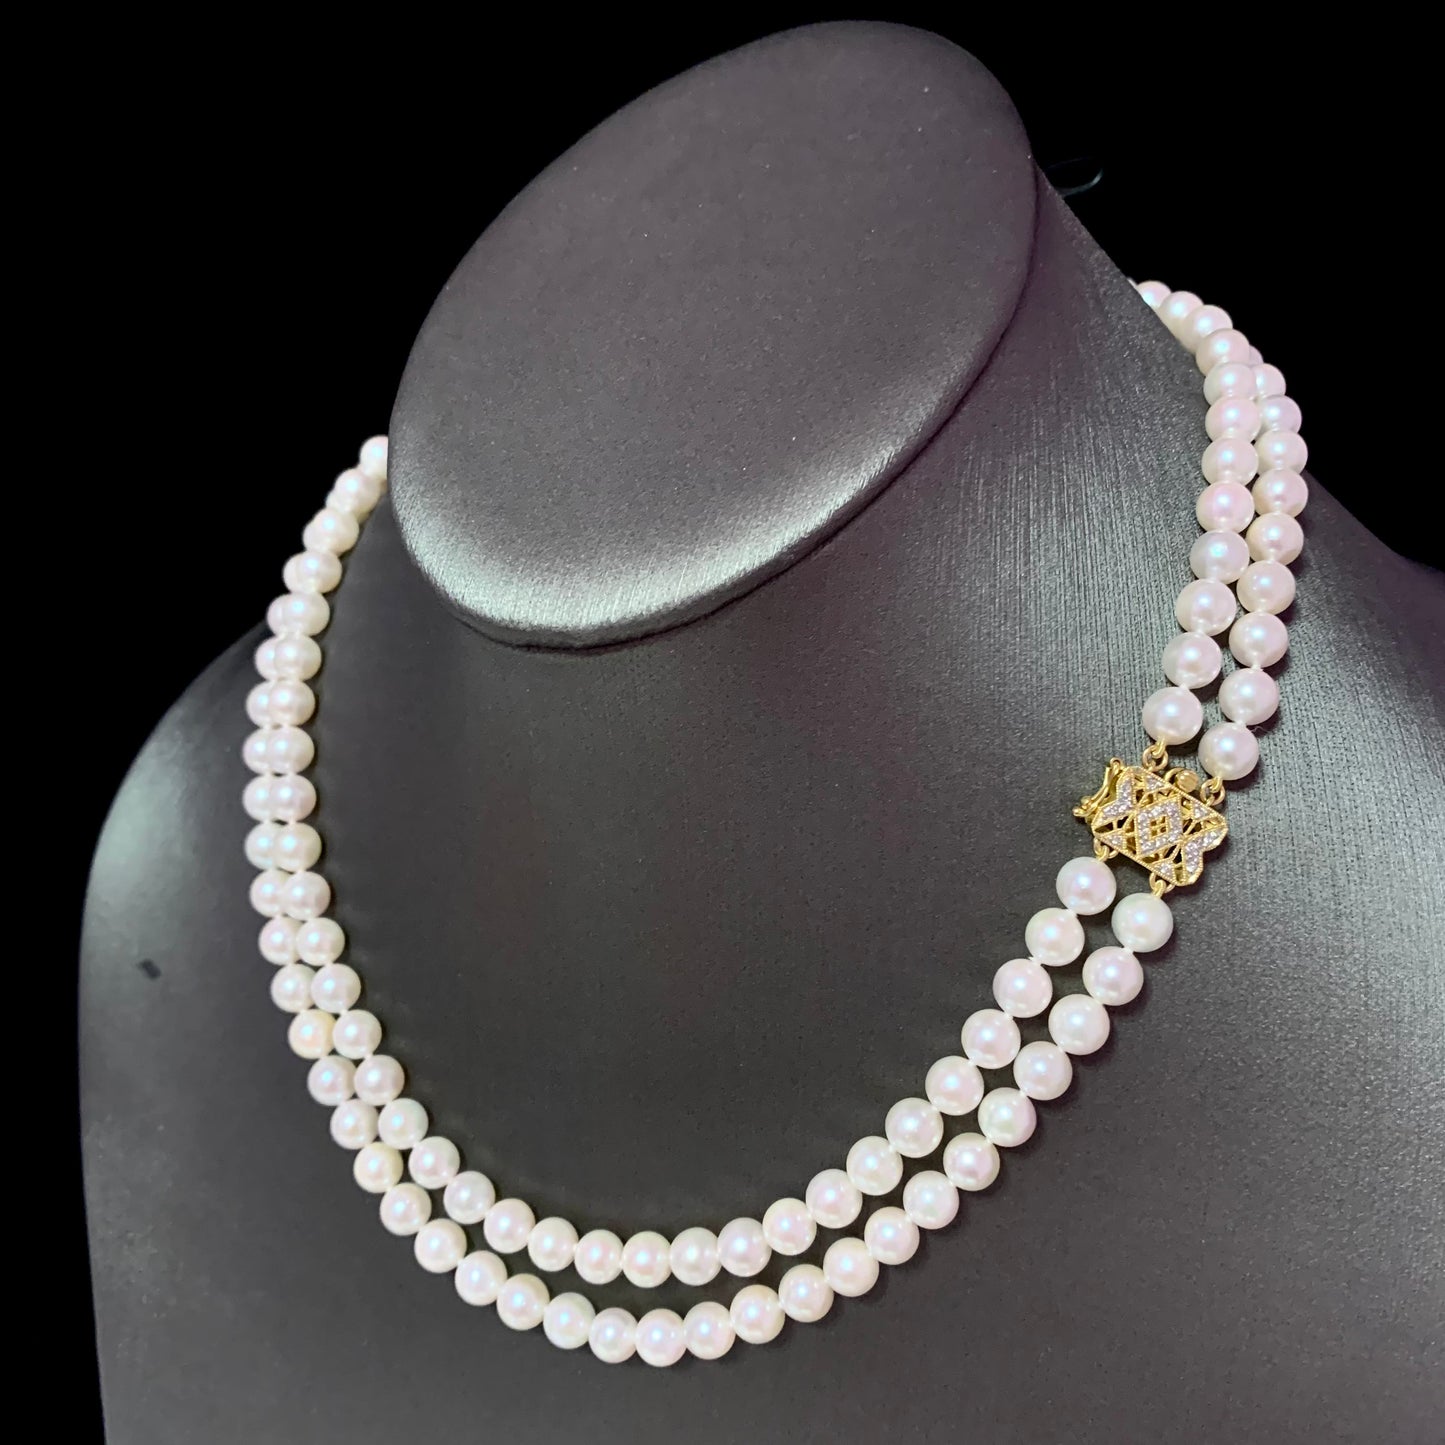 Diamond Akoya Pearl 2-Strand Necklace 17" 18k Gold 6.5mm Certified $6,900 120673 - Certified Estate Jewelry